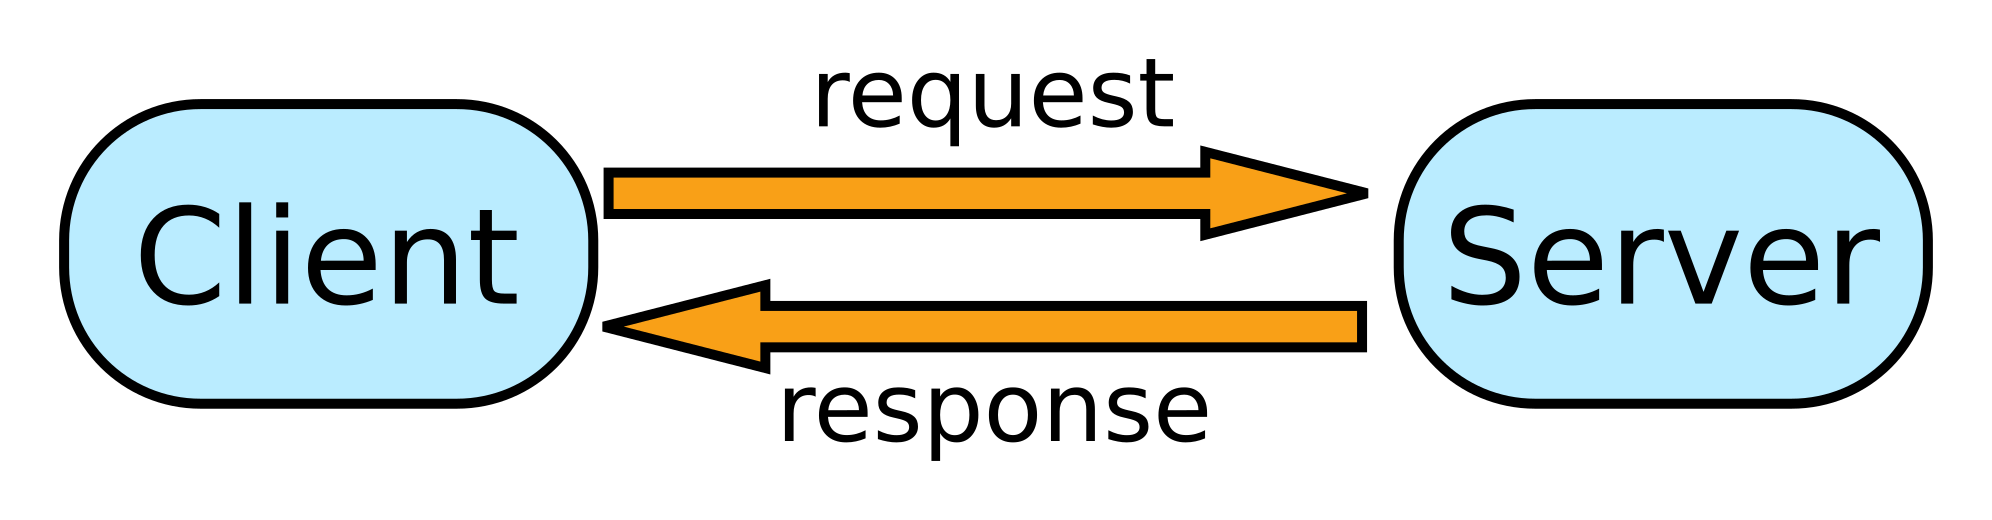 Client response. Request. Request лого. Request картинки. Client's request картинки.